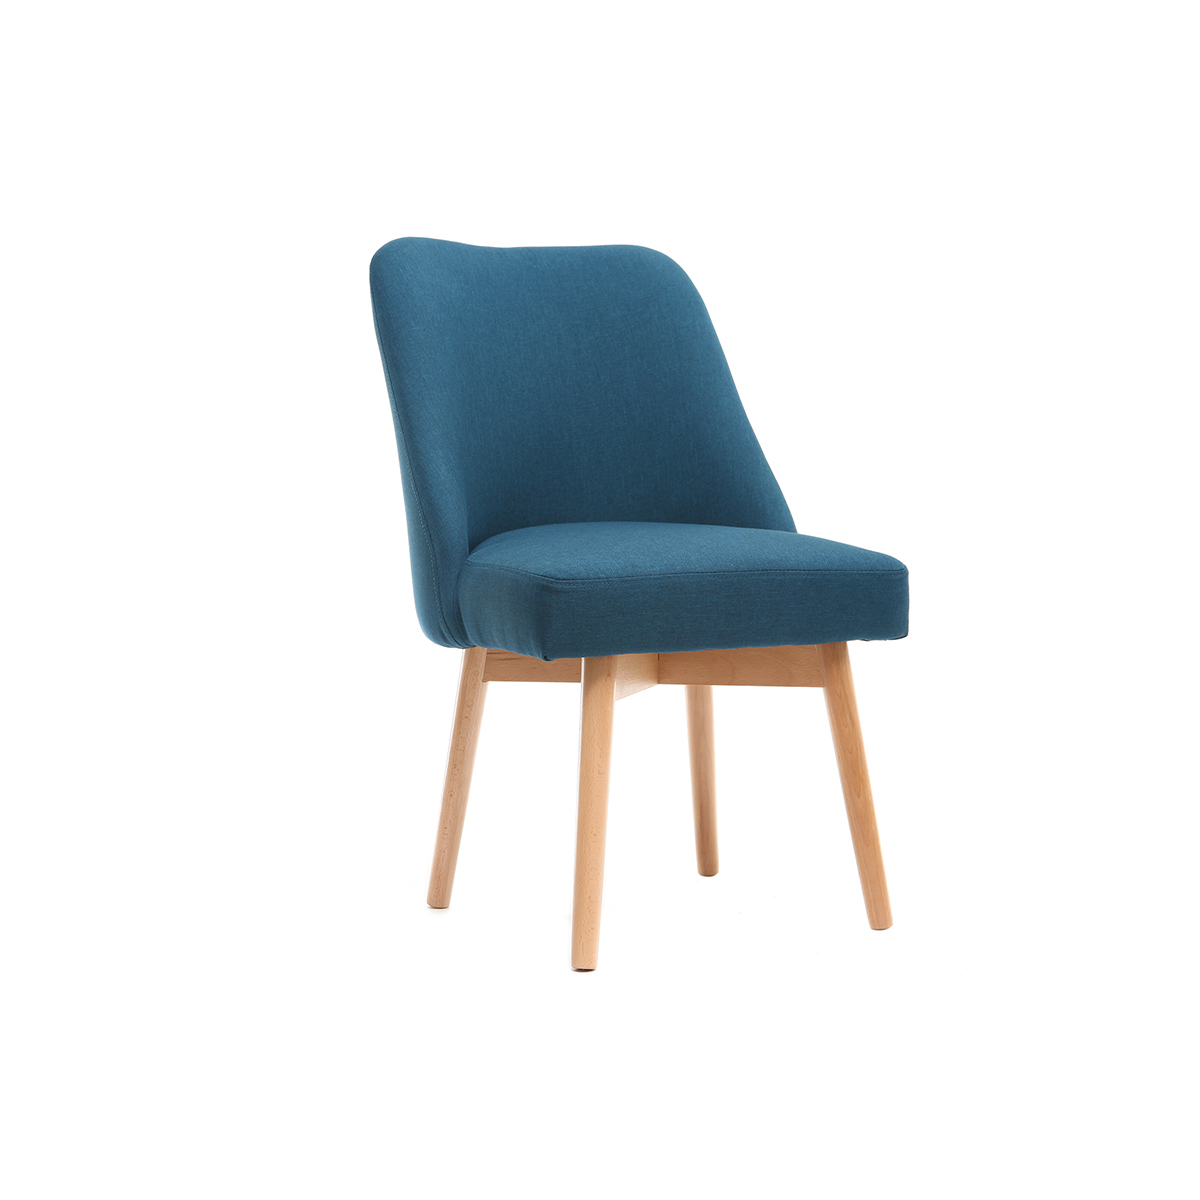 Chaise scandinave en tissu bleu canard et bois clair LIV vue1